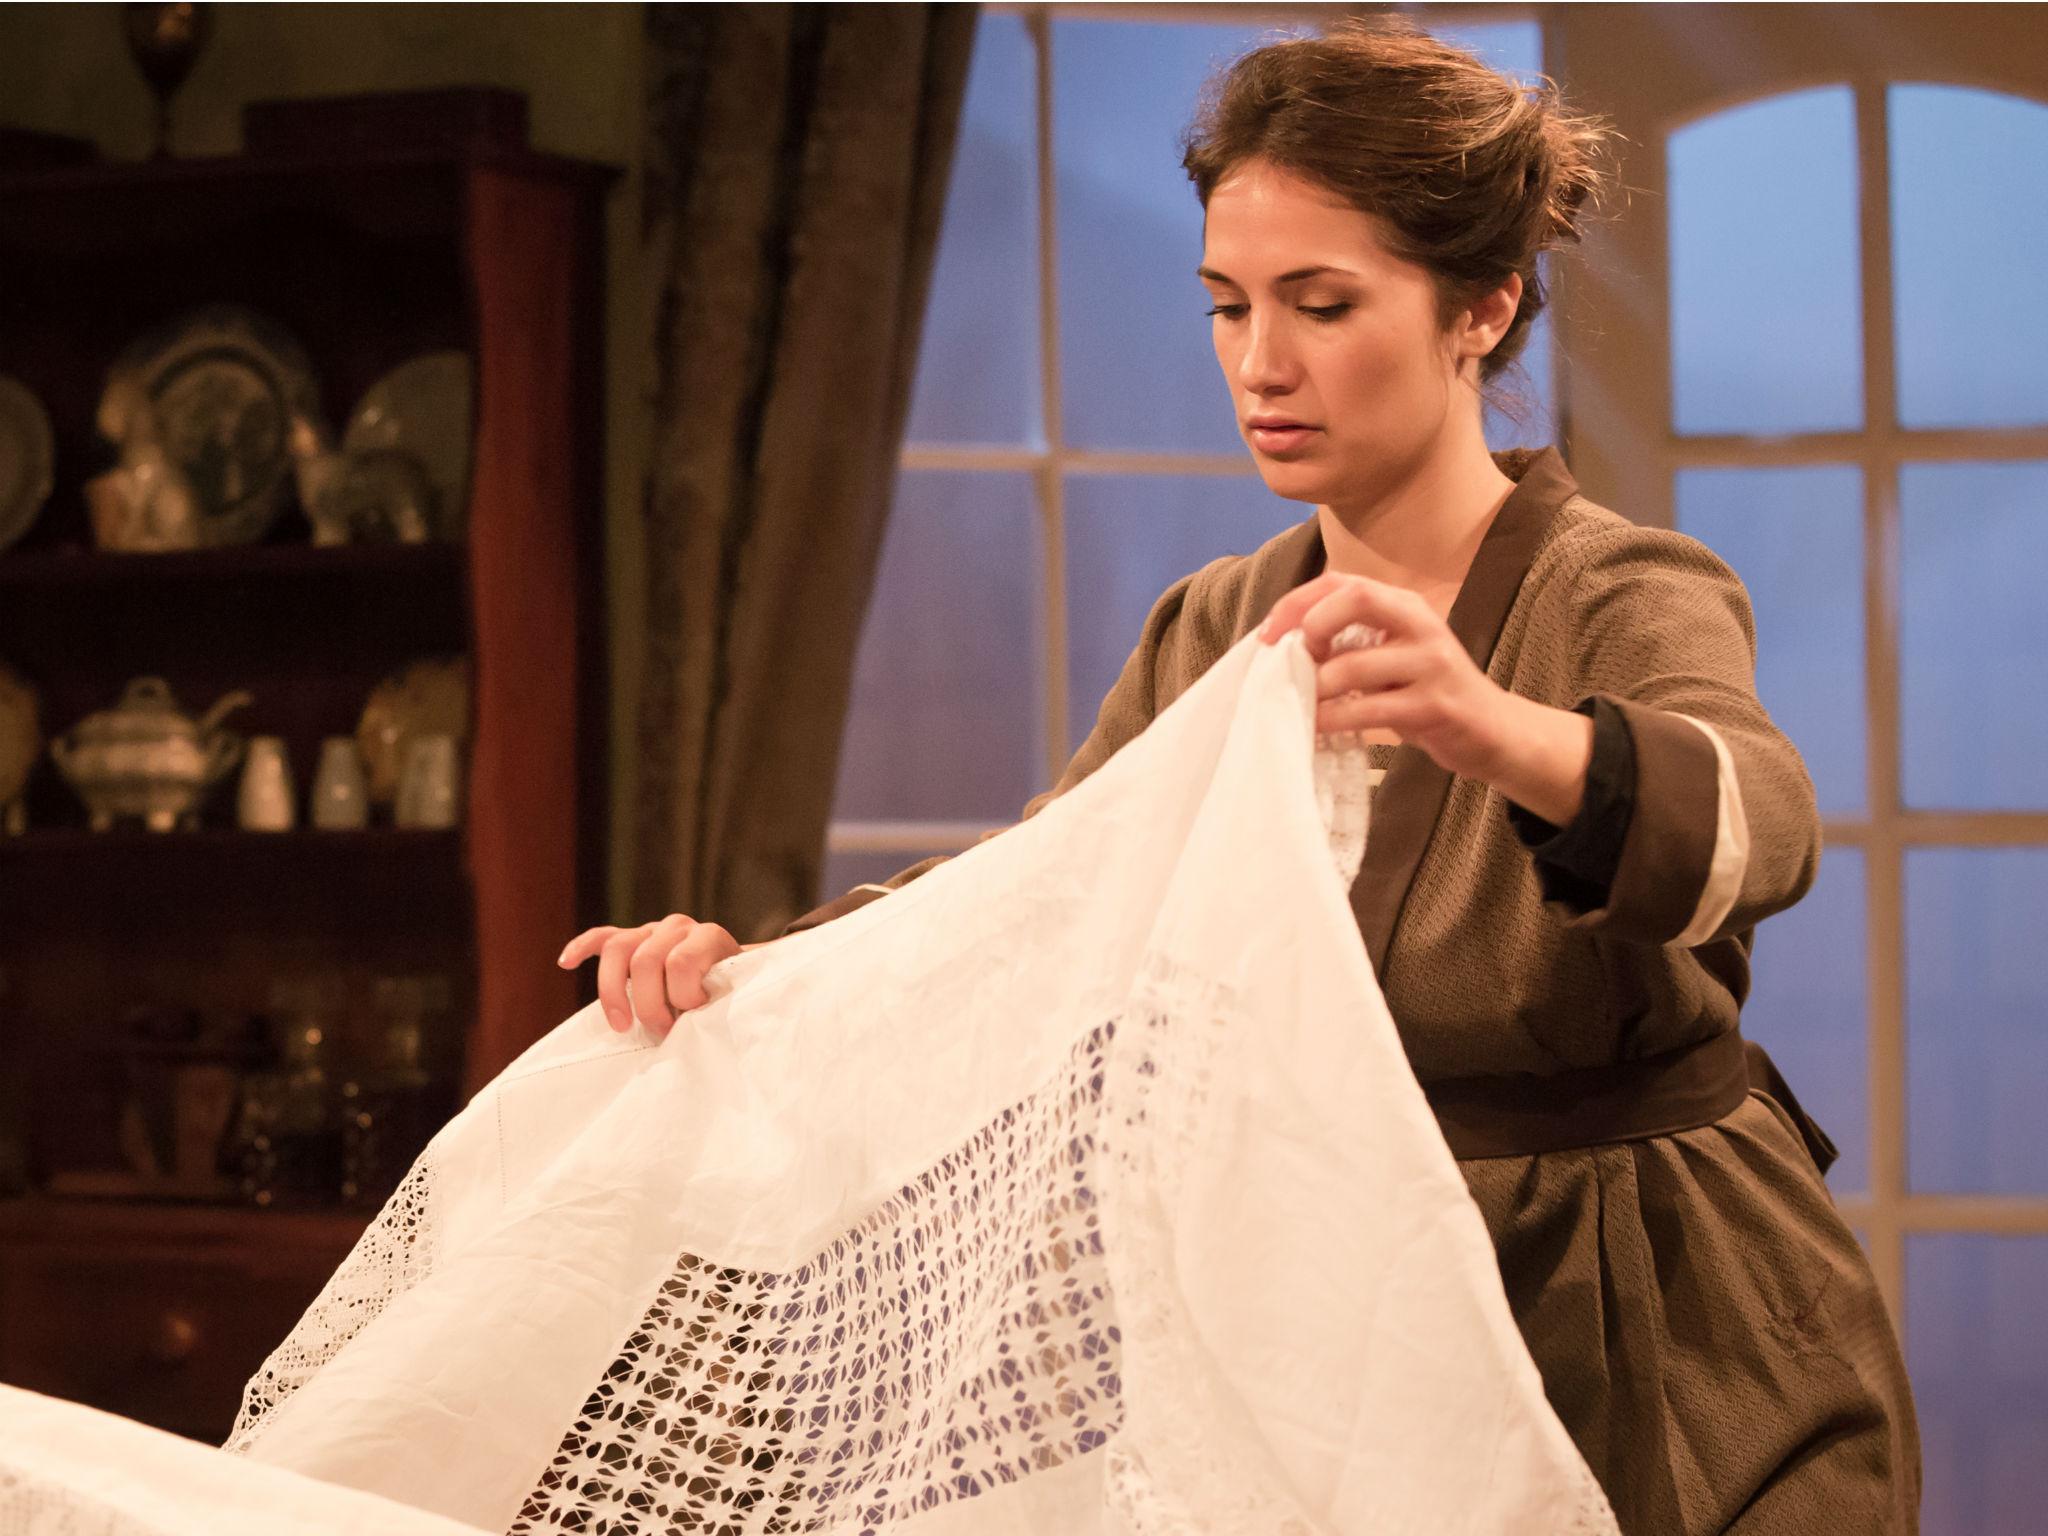 Charlotte Brimble as Faith in ‘Windows’ at the Finborough Theatre